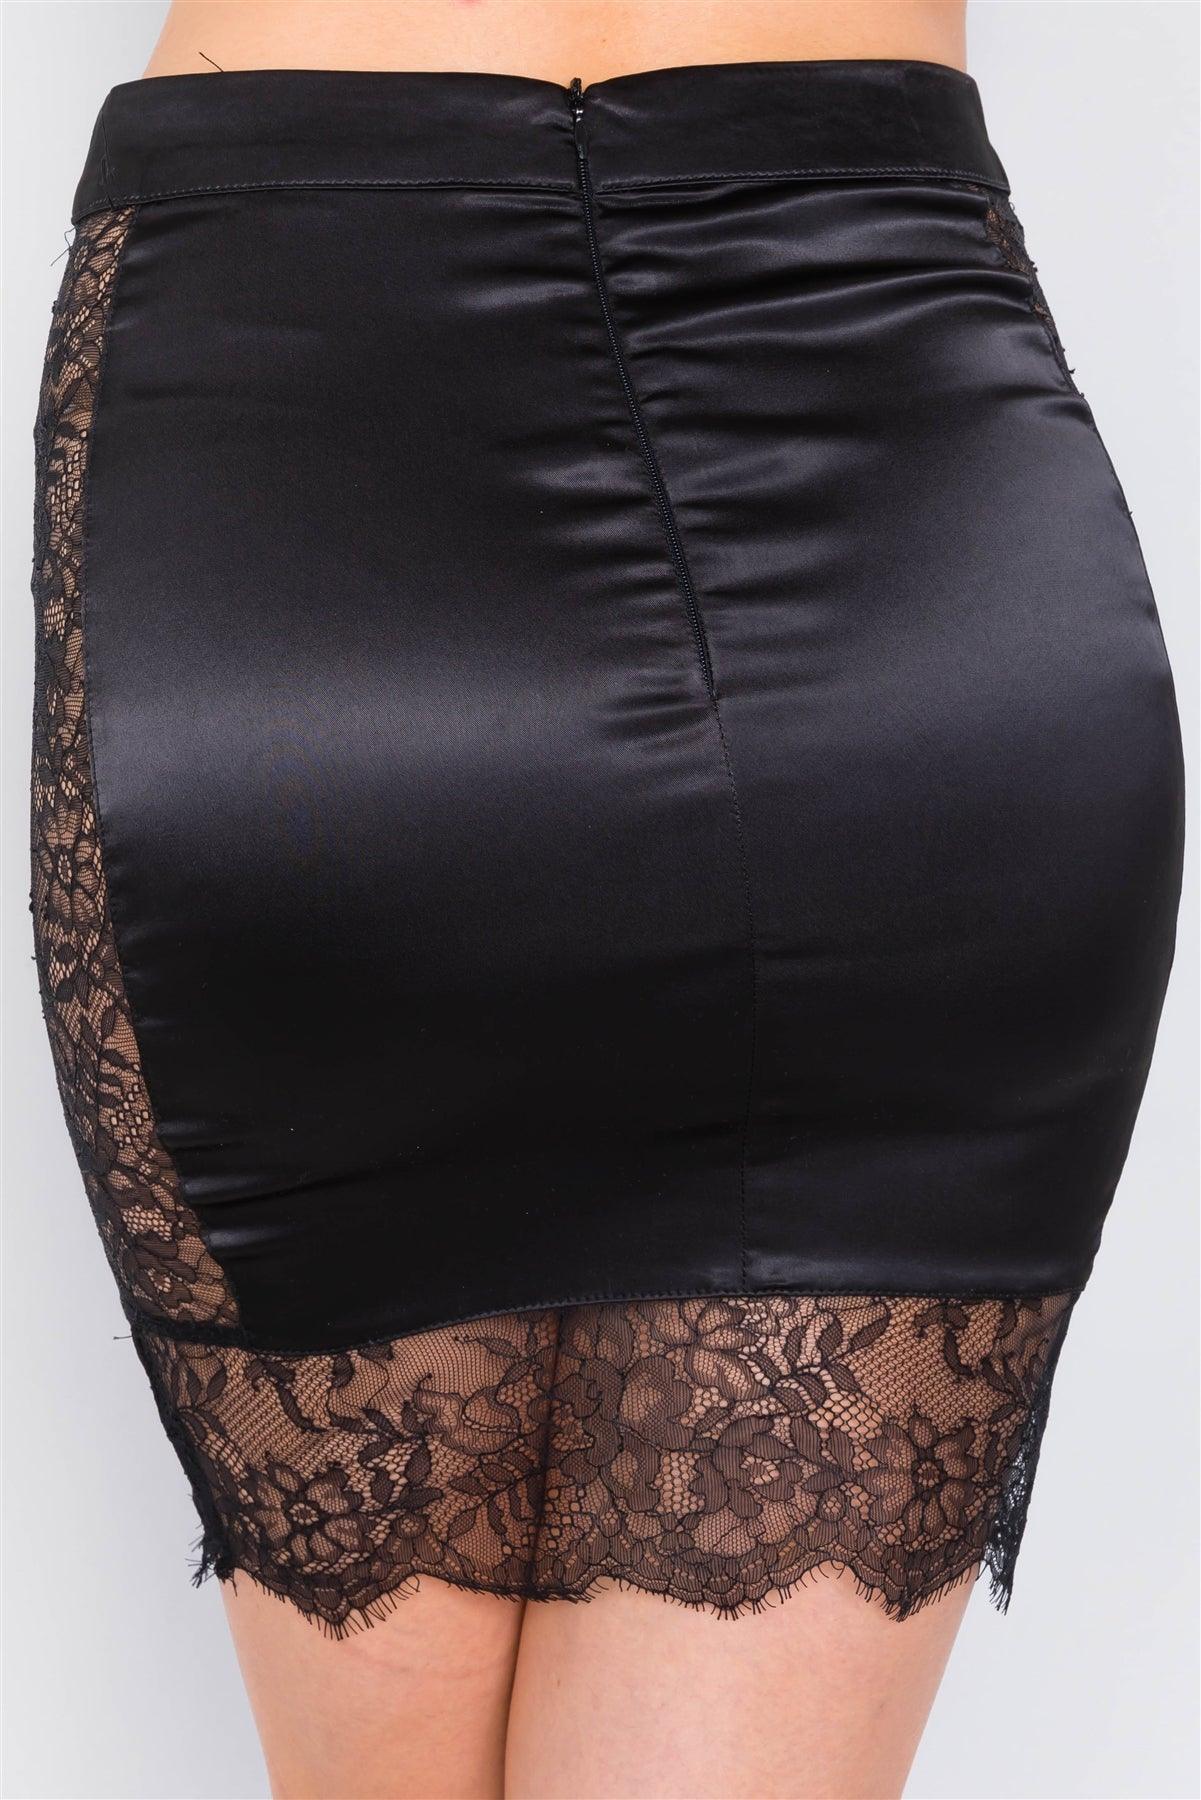 Black Satin Lace Nylon Cut Out Side Chic Mini Skirt /2-2-2